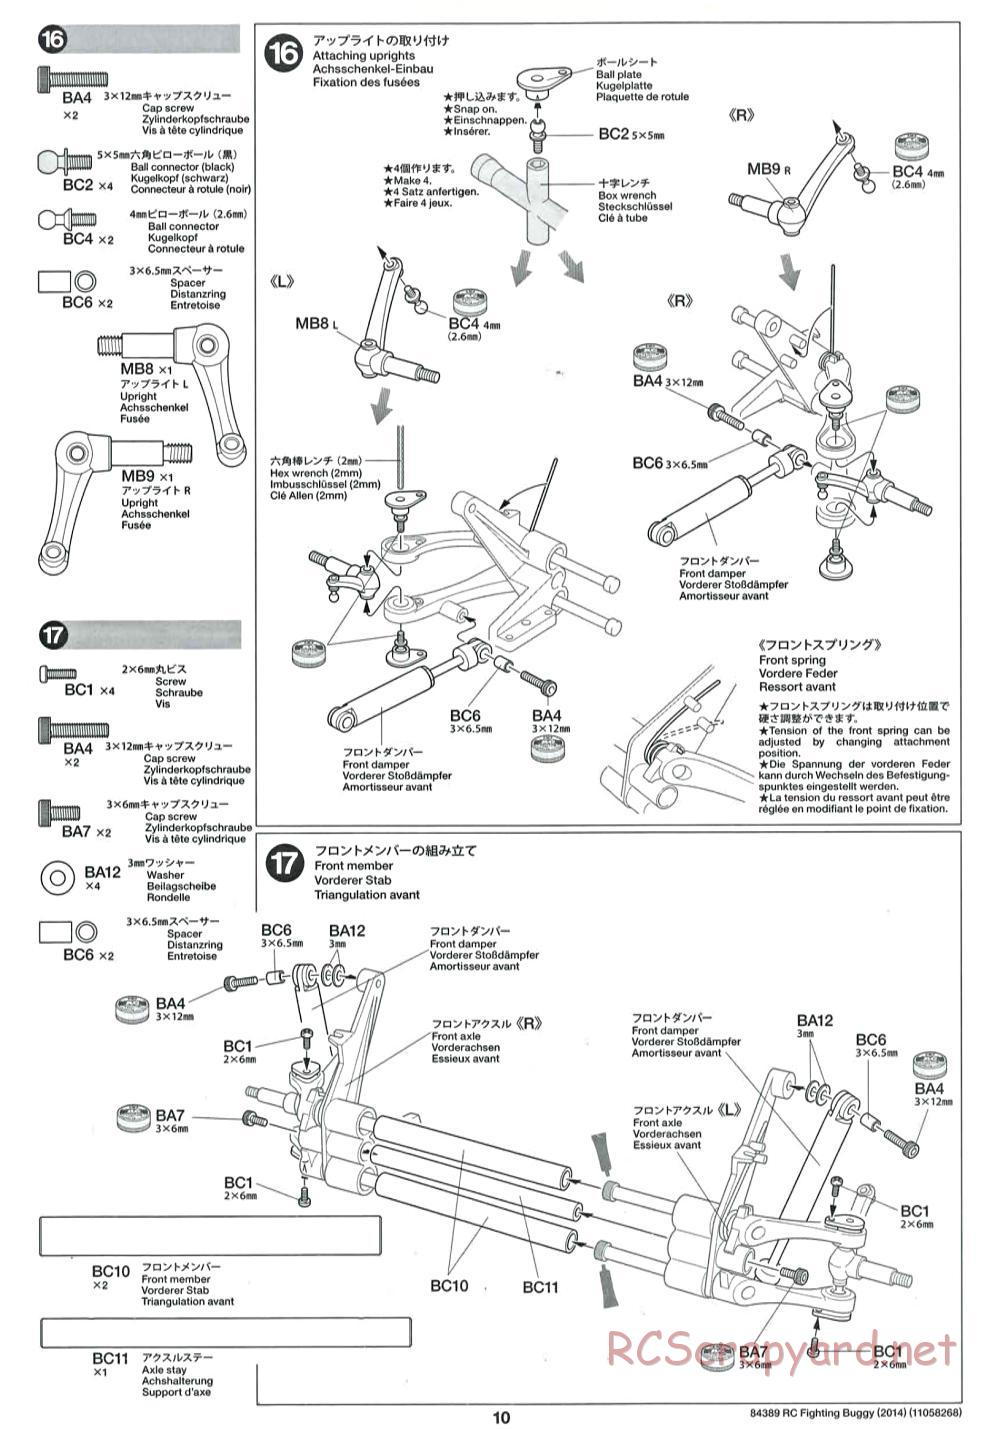 Tamiya - Fighting Buggy (2014) Chassis - Manual - Page 10